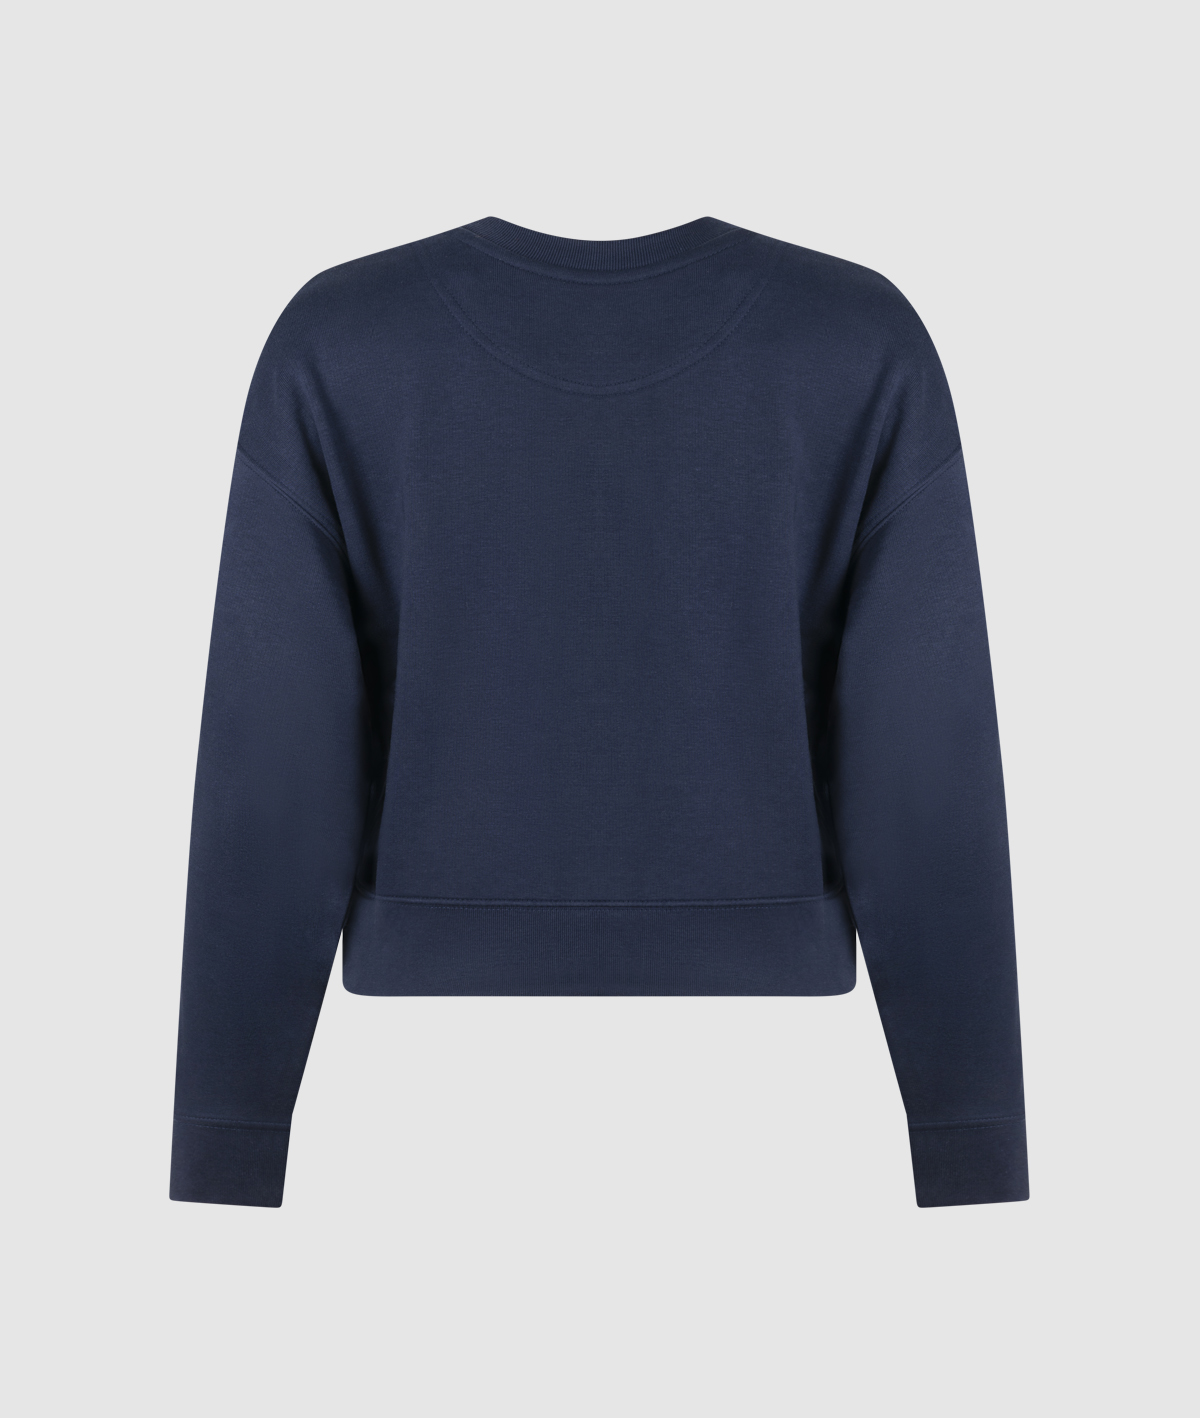 Stella Cropster IEU Sweatshirt. french navy colour back